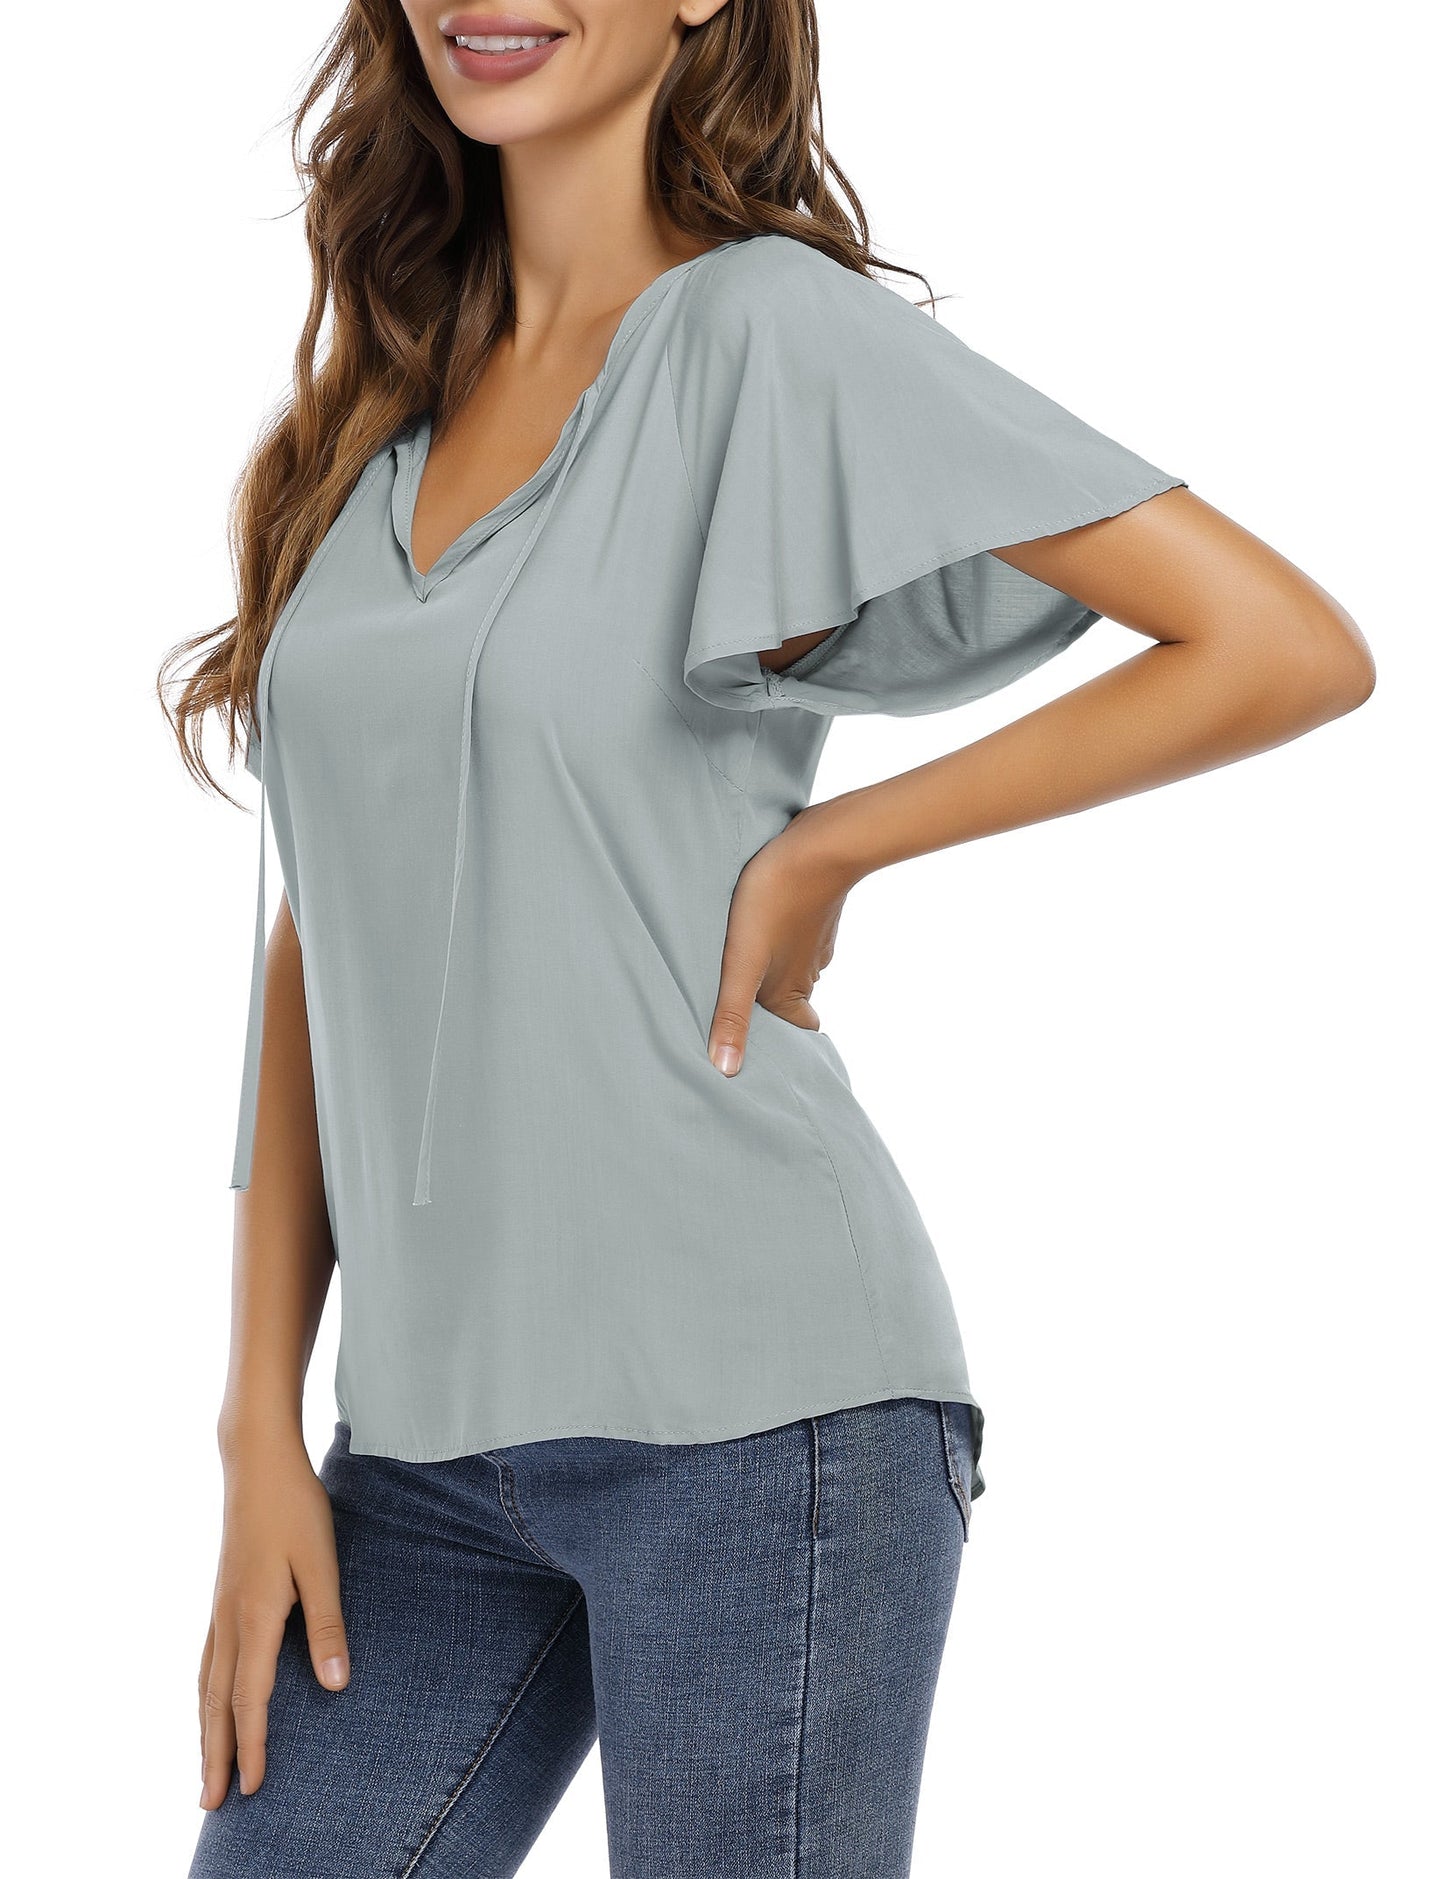 CLEARLOVE Women's V Neck Top Short Ruffle Drawstring Shirt Grey